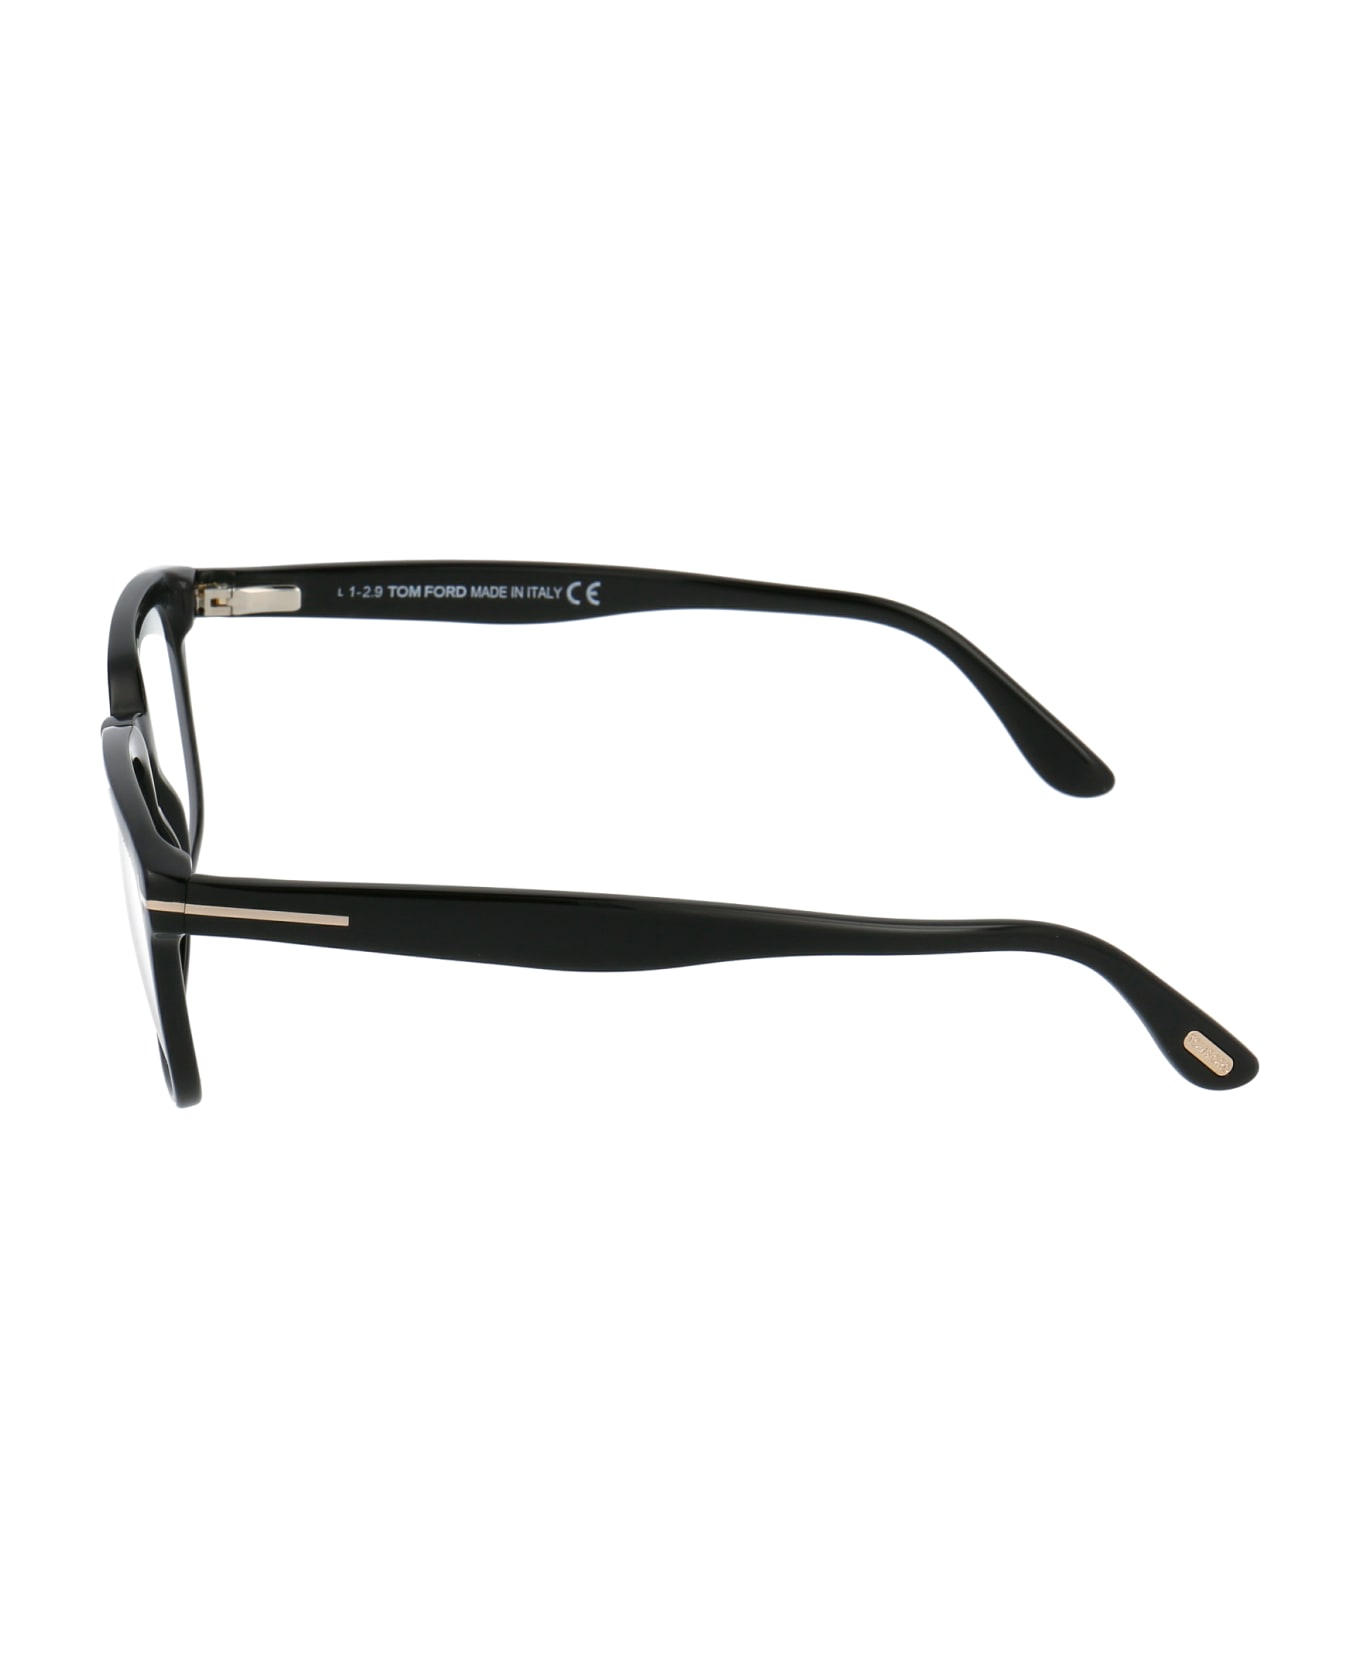 Tom Ford Eyewear Ft5626-b Glasses - 001 Nero Lucido アイウェア